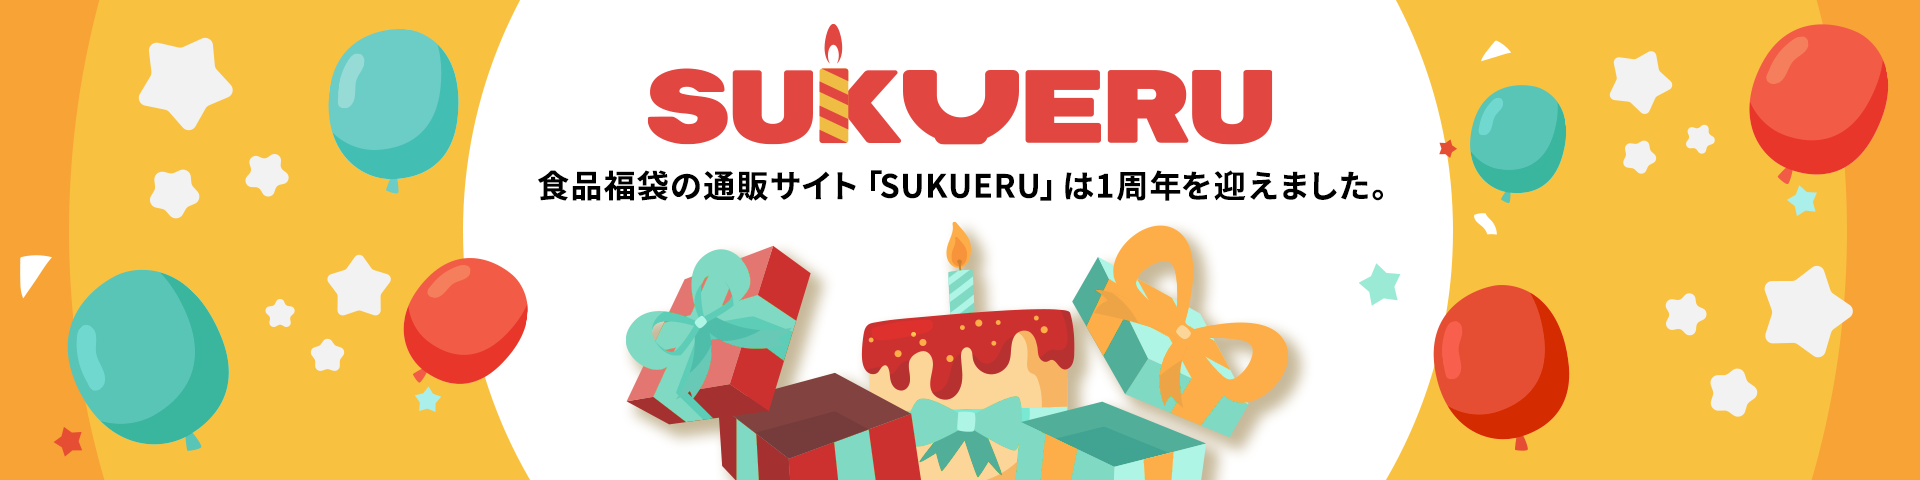 SUKUERU 食品福袋の通販サイト「SUKUERU」は1周年を迎えました。